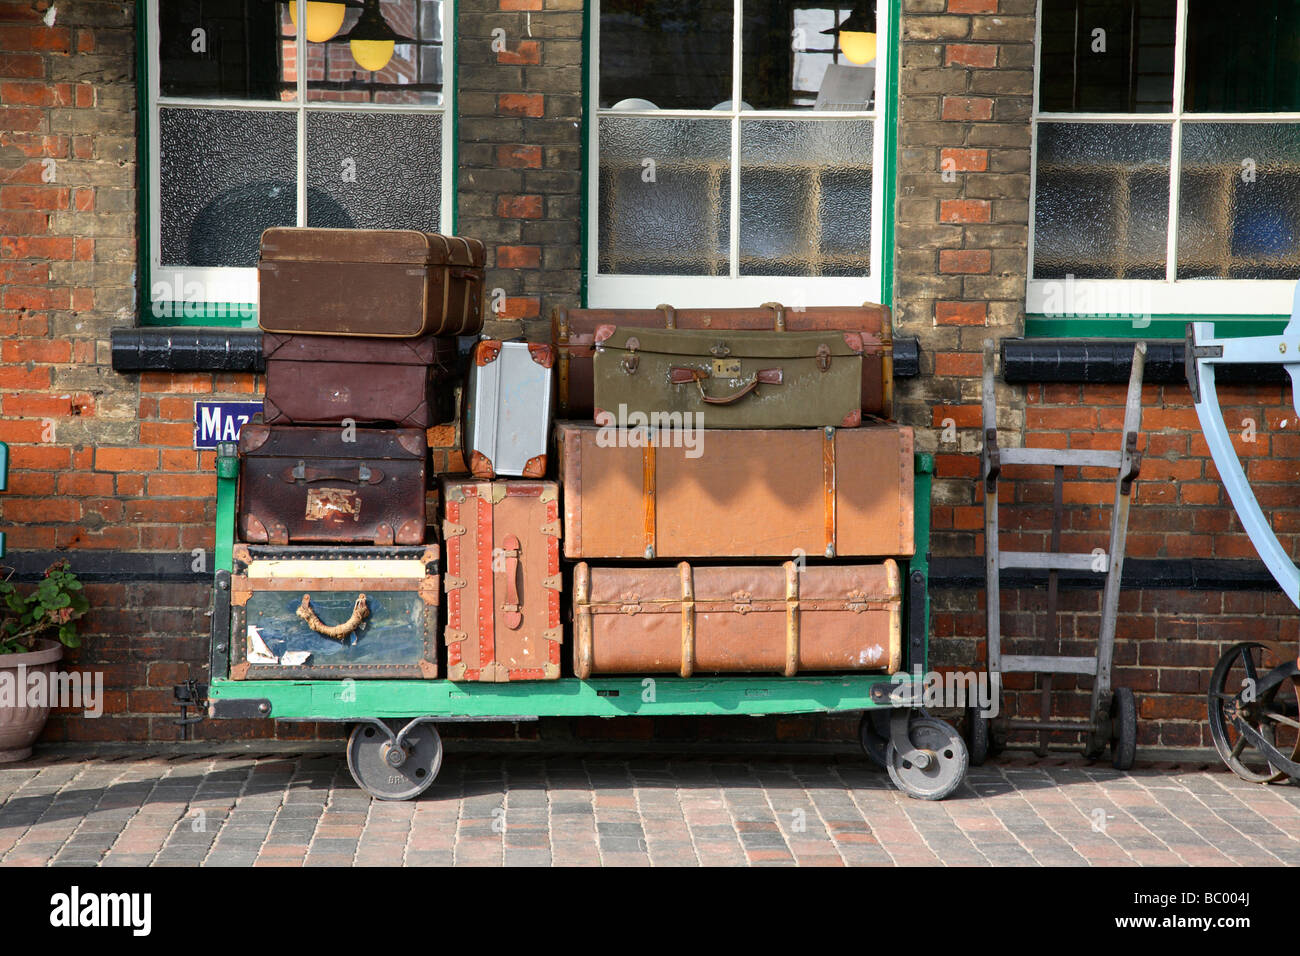 Old luggage on a railway platform. Stock Photo